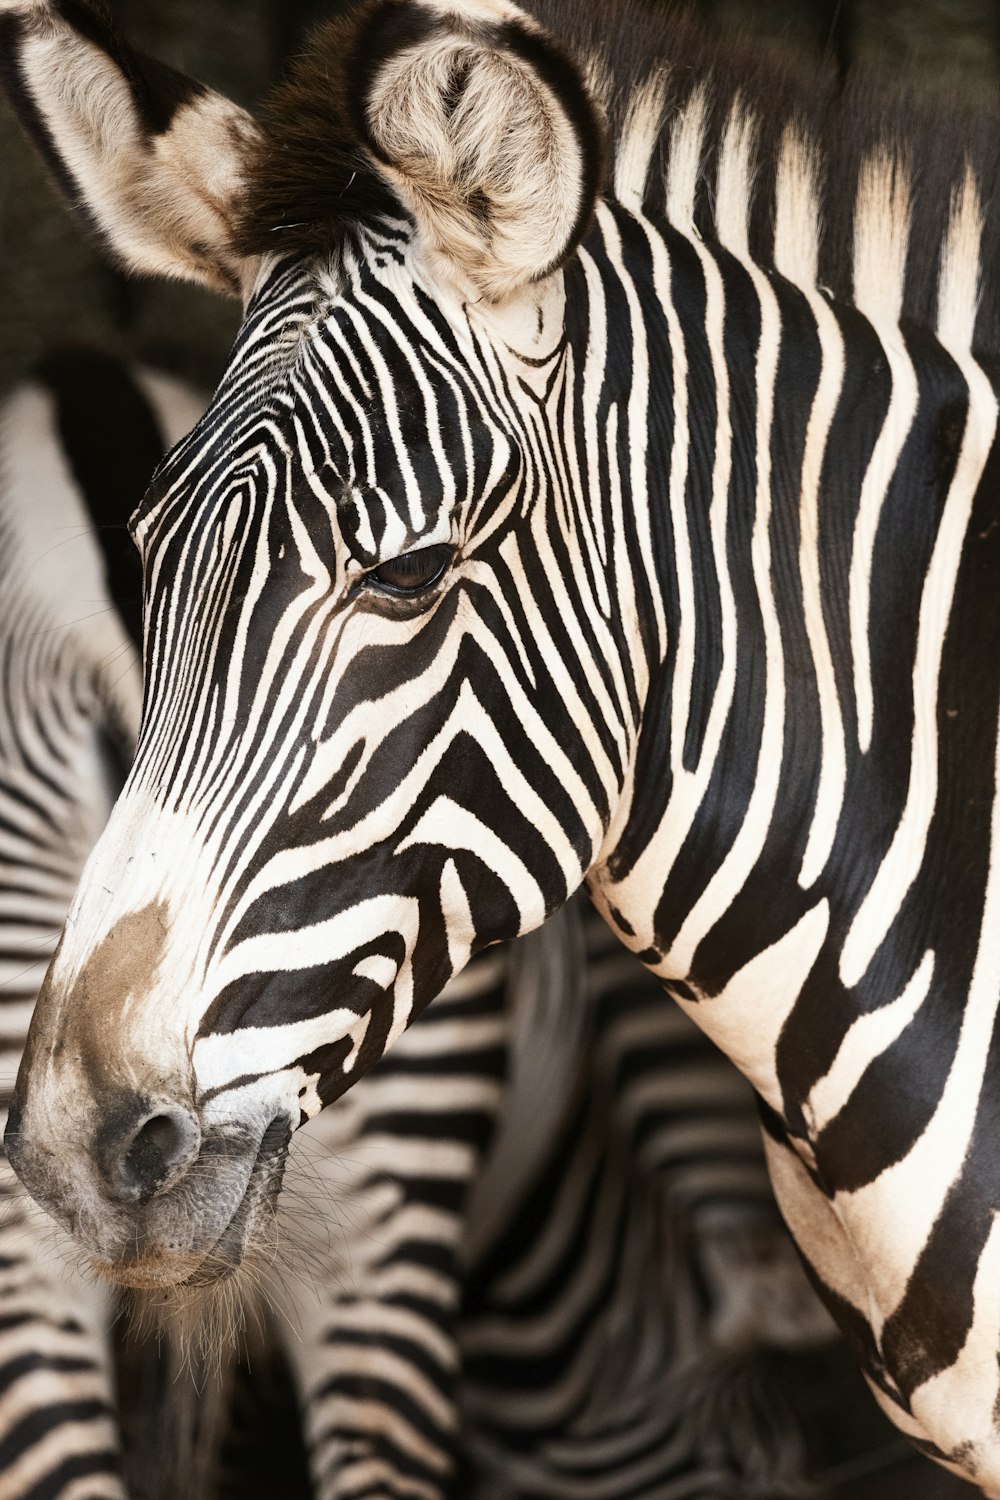 a zebra stands next to another zebra